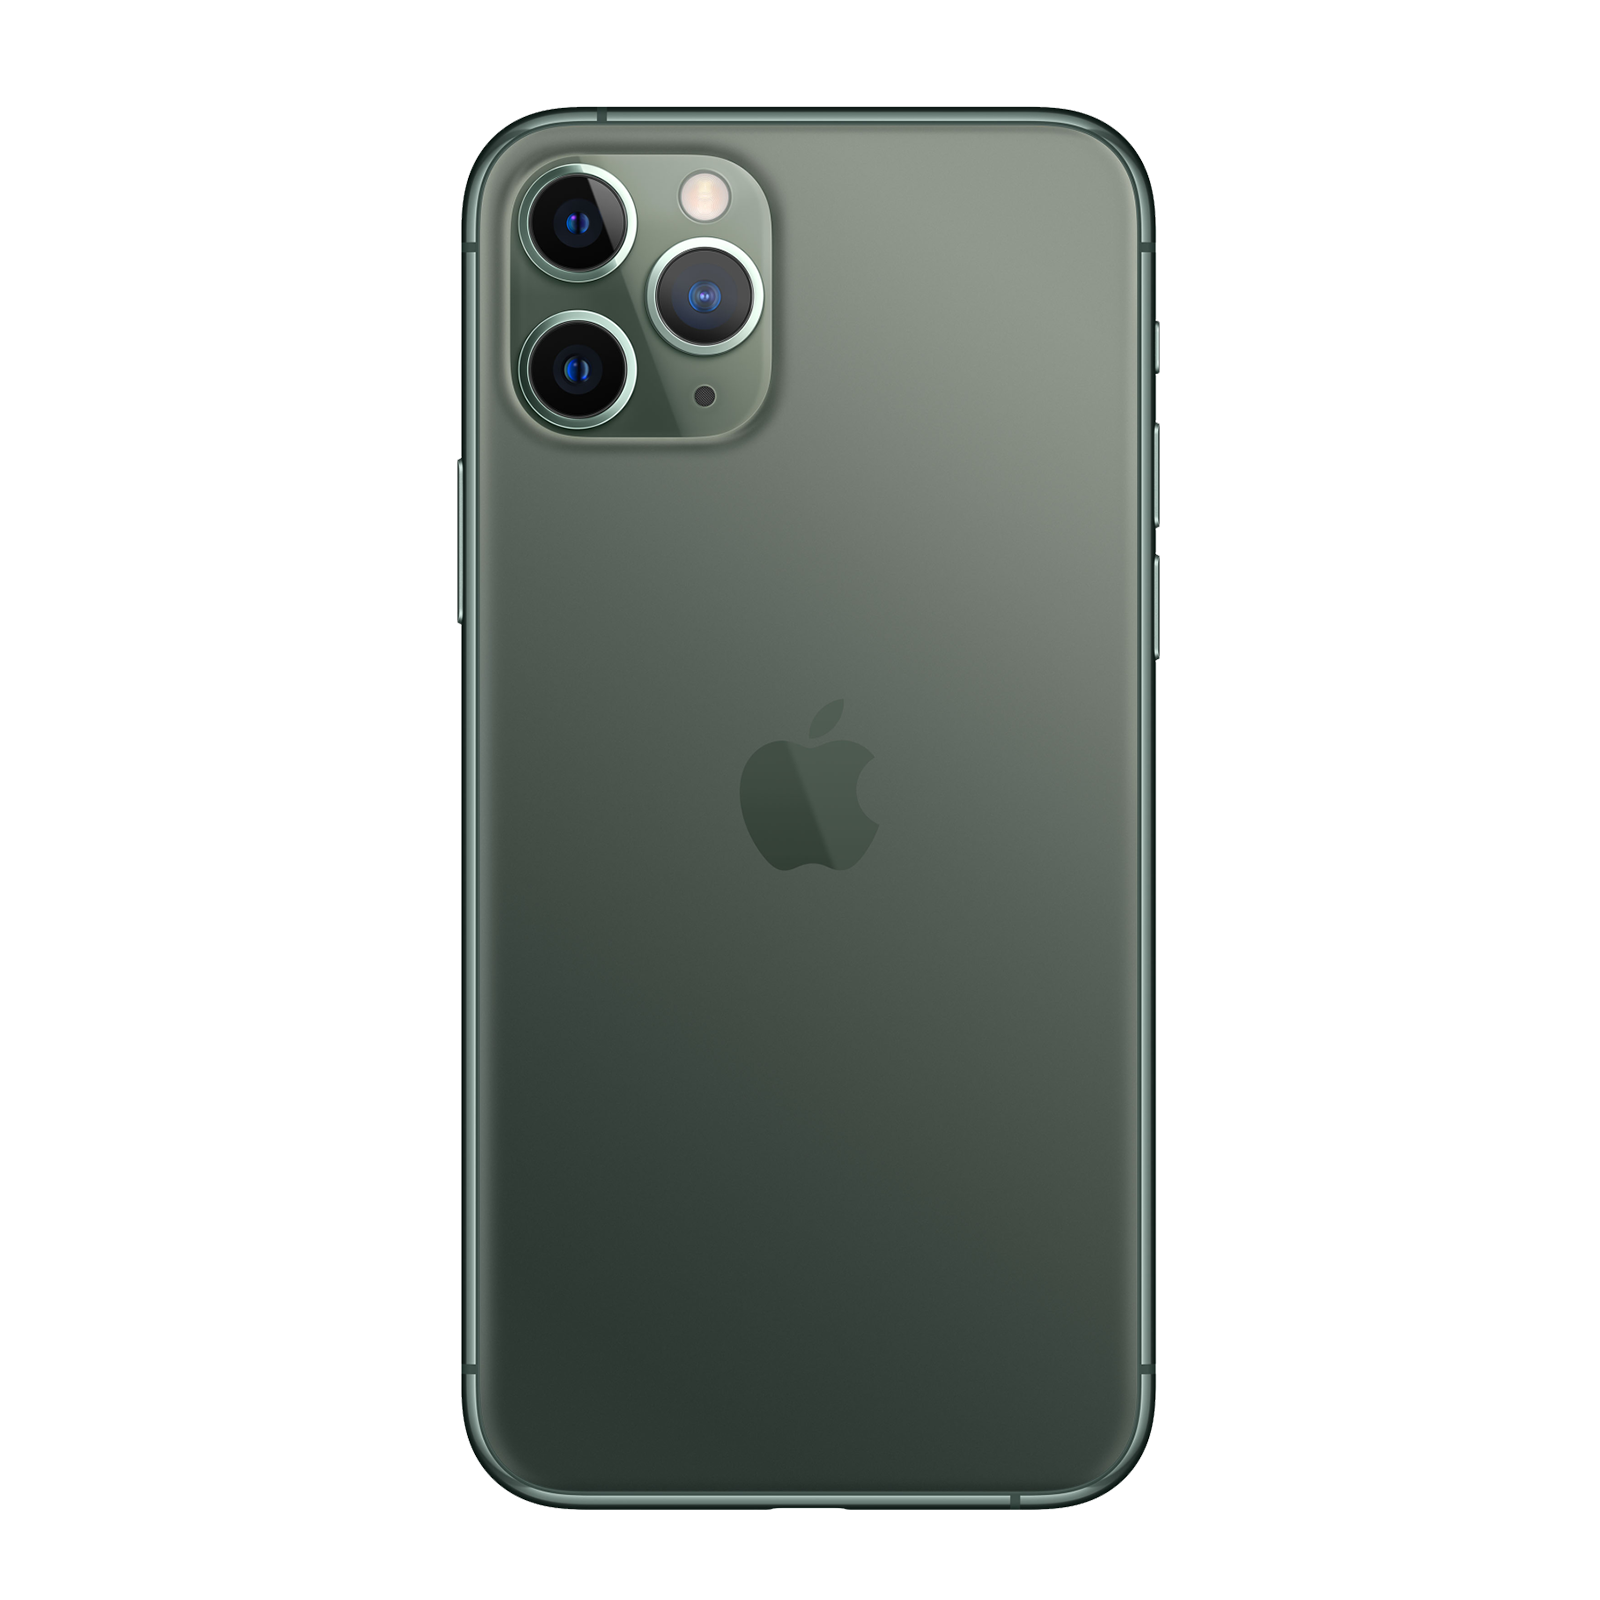 Apple iPhone 11 Pro 256GB Midnight Green Good - Unlocked